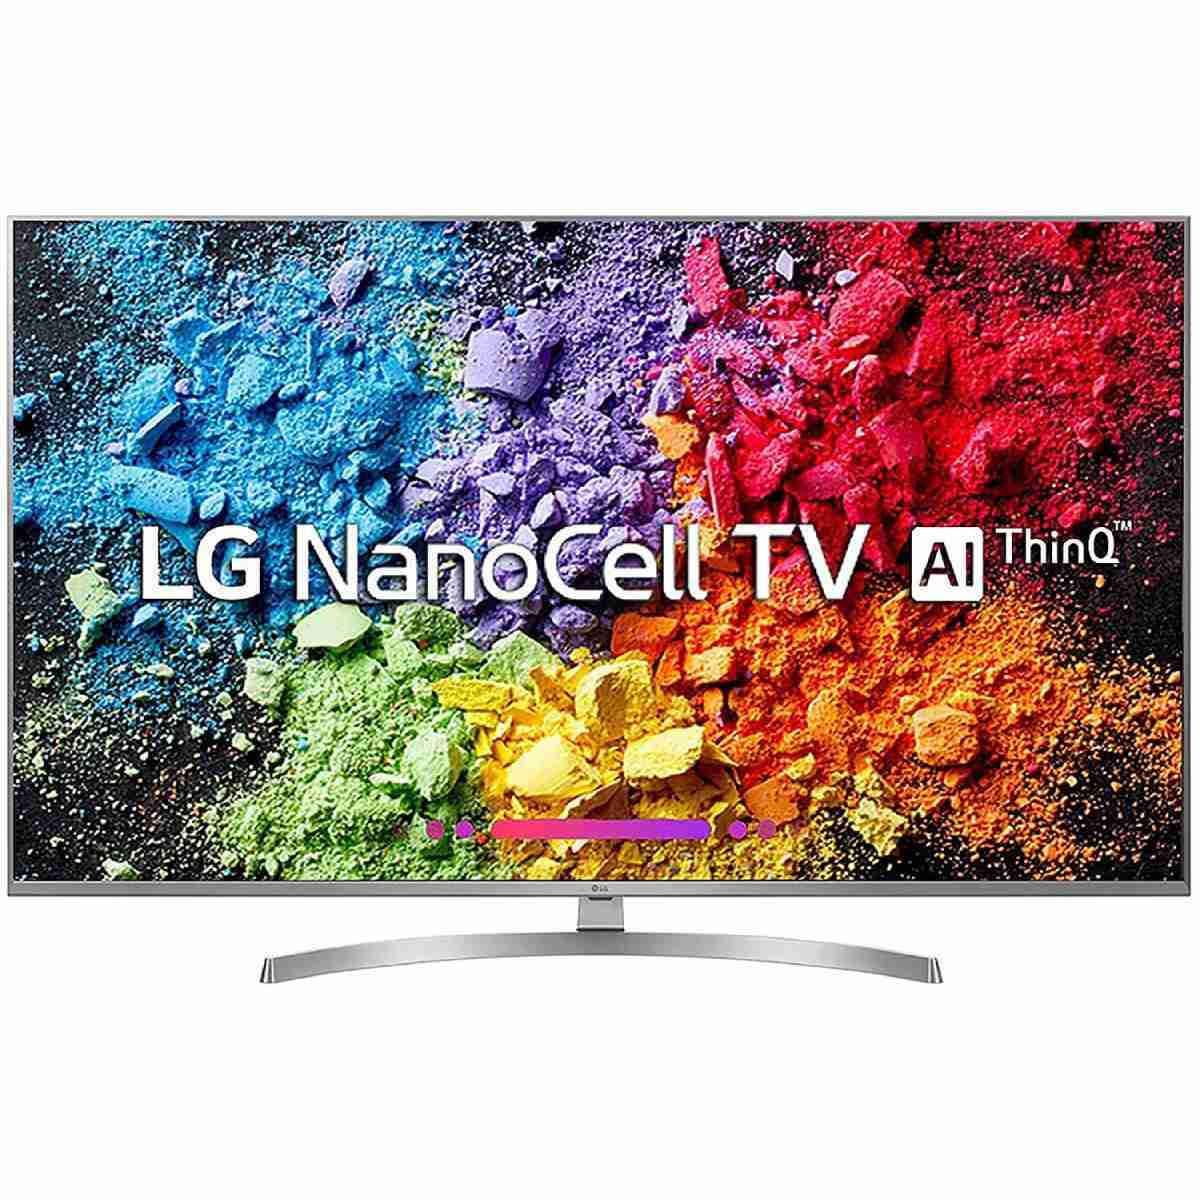 LG 49 Inches 4K Ultra HD Smart NanoCell TV (49UK7500PTA)